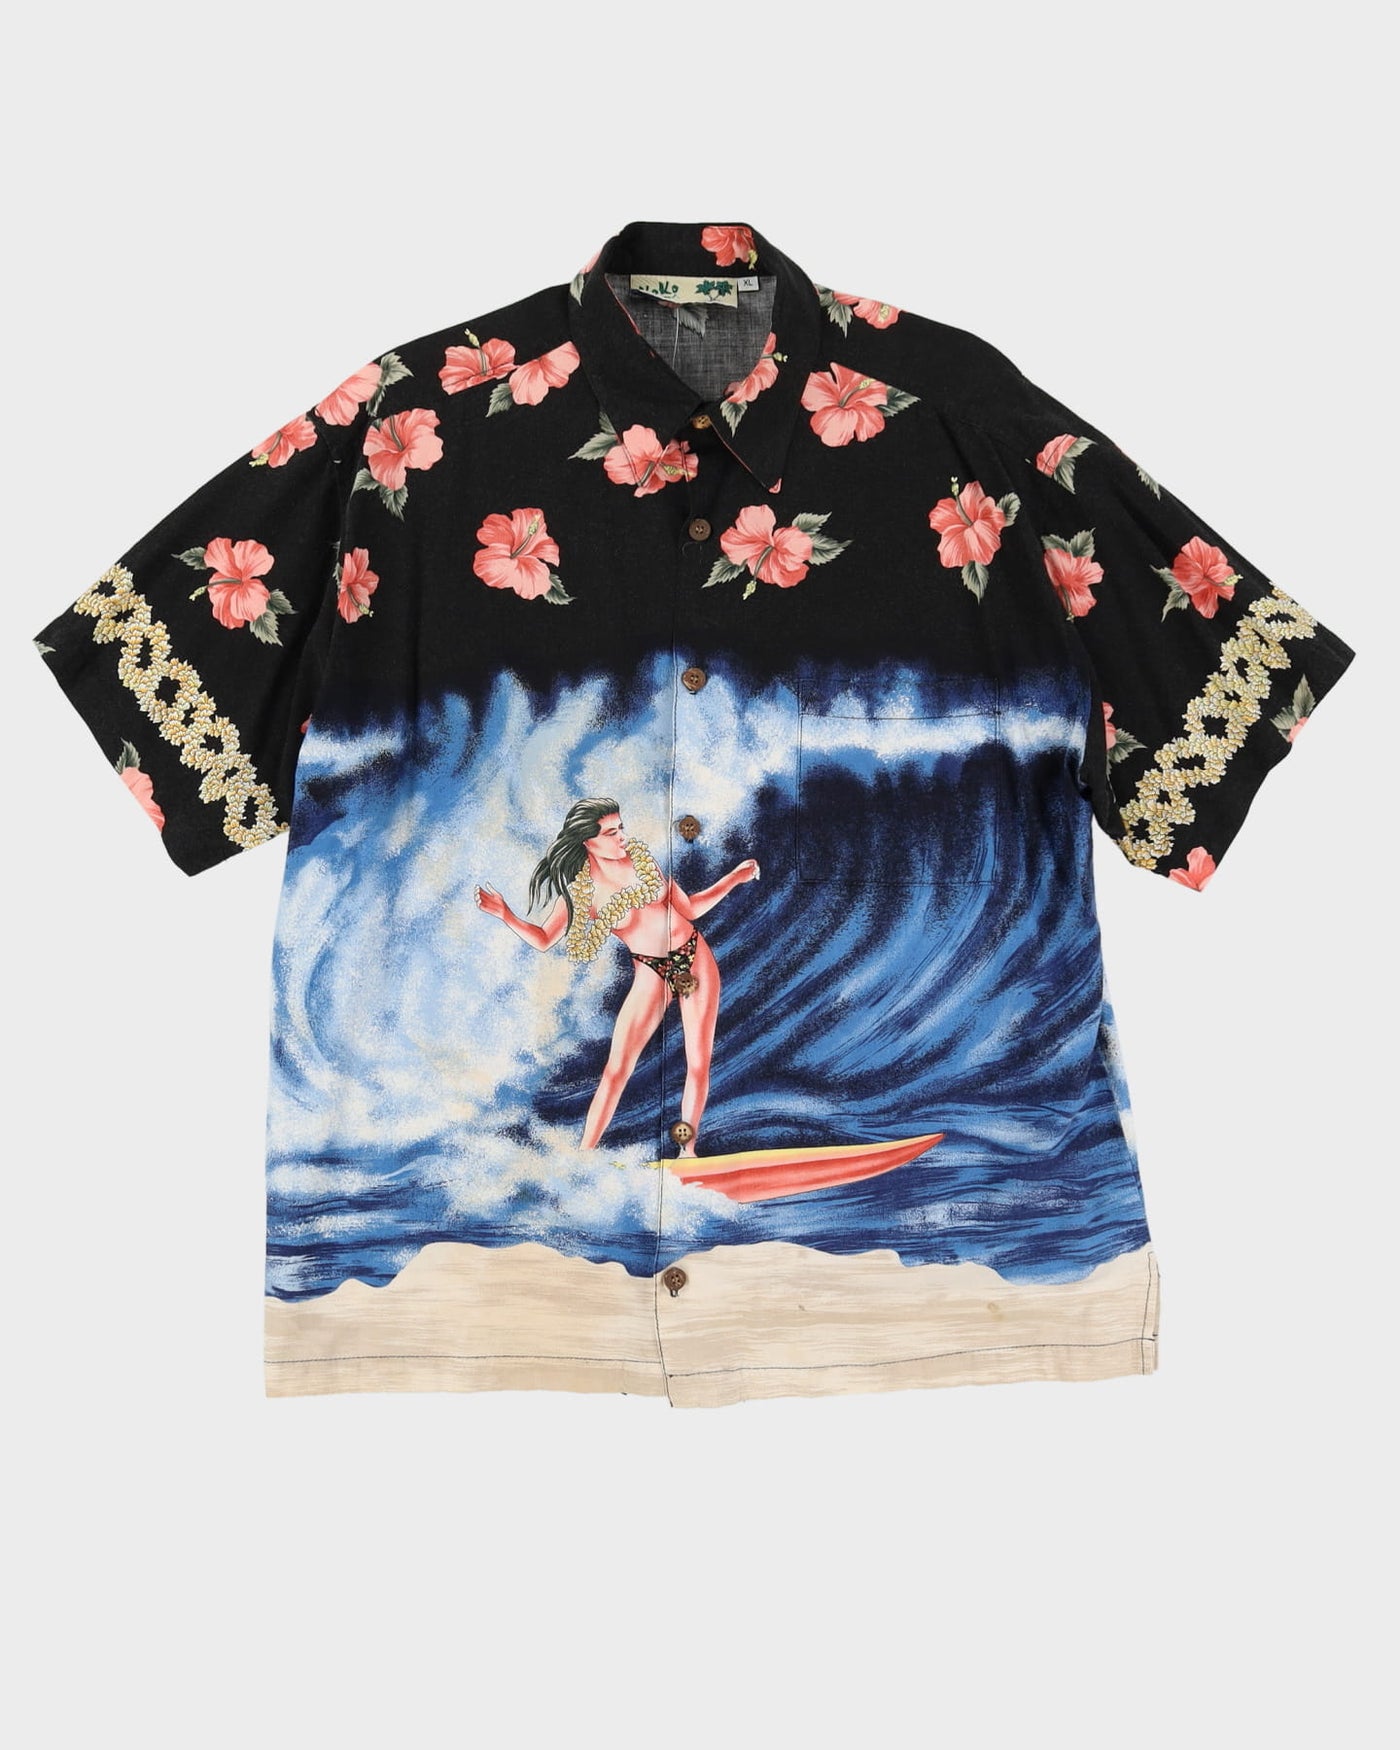 1990s Patterned Cotton Hawaiian Style Shirt - XL